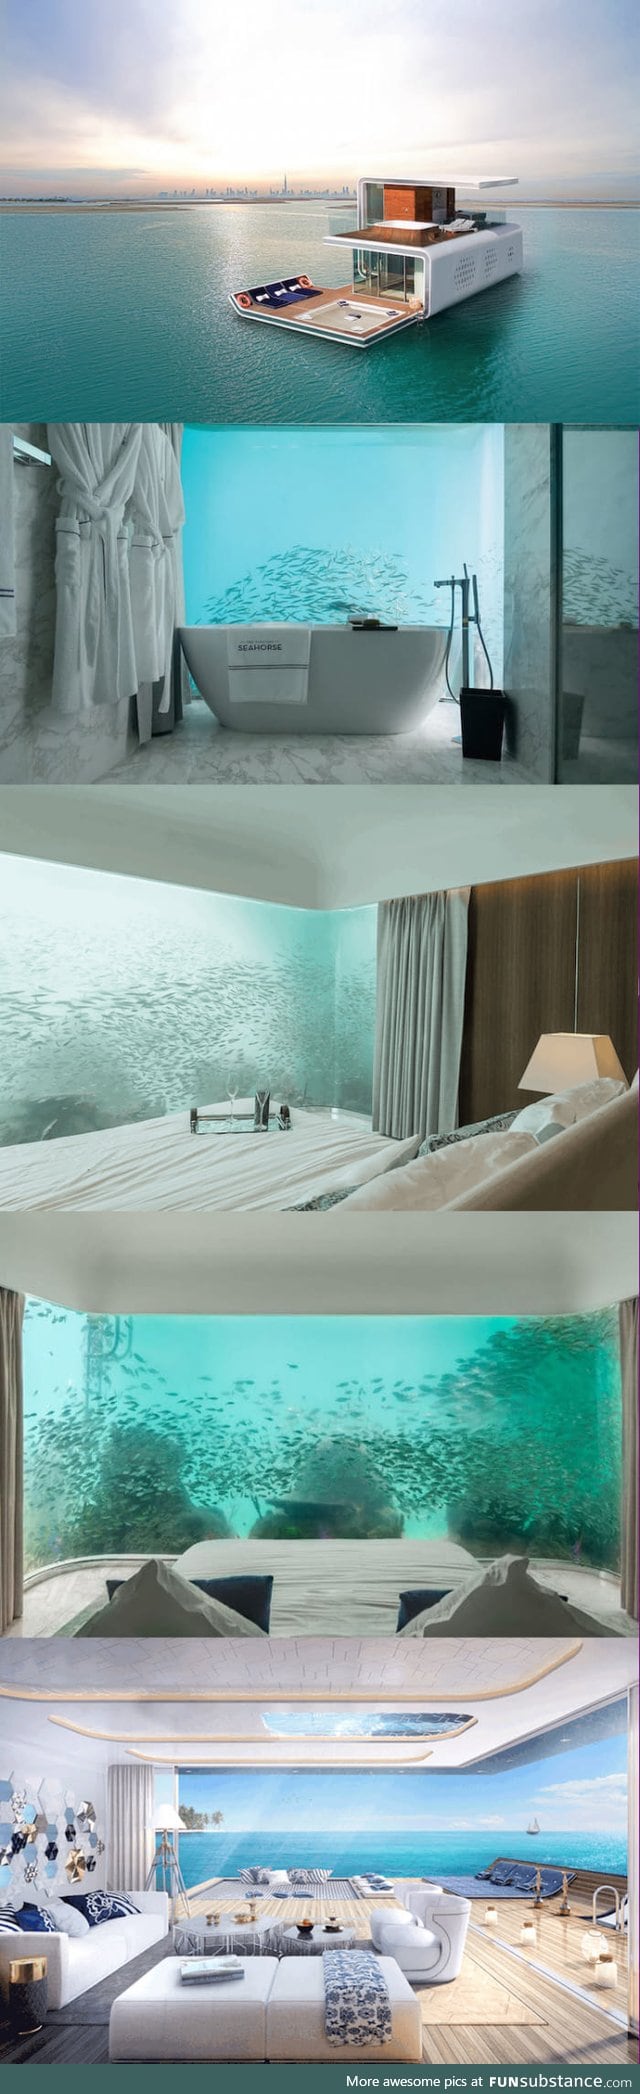 Dubai is building beautiful underwater homes